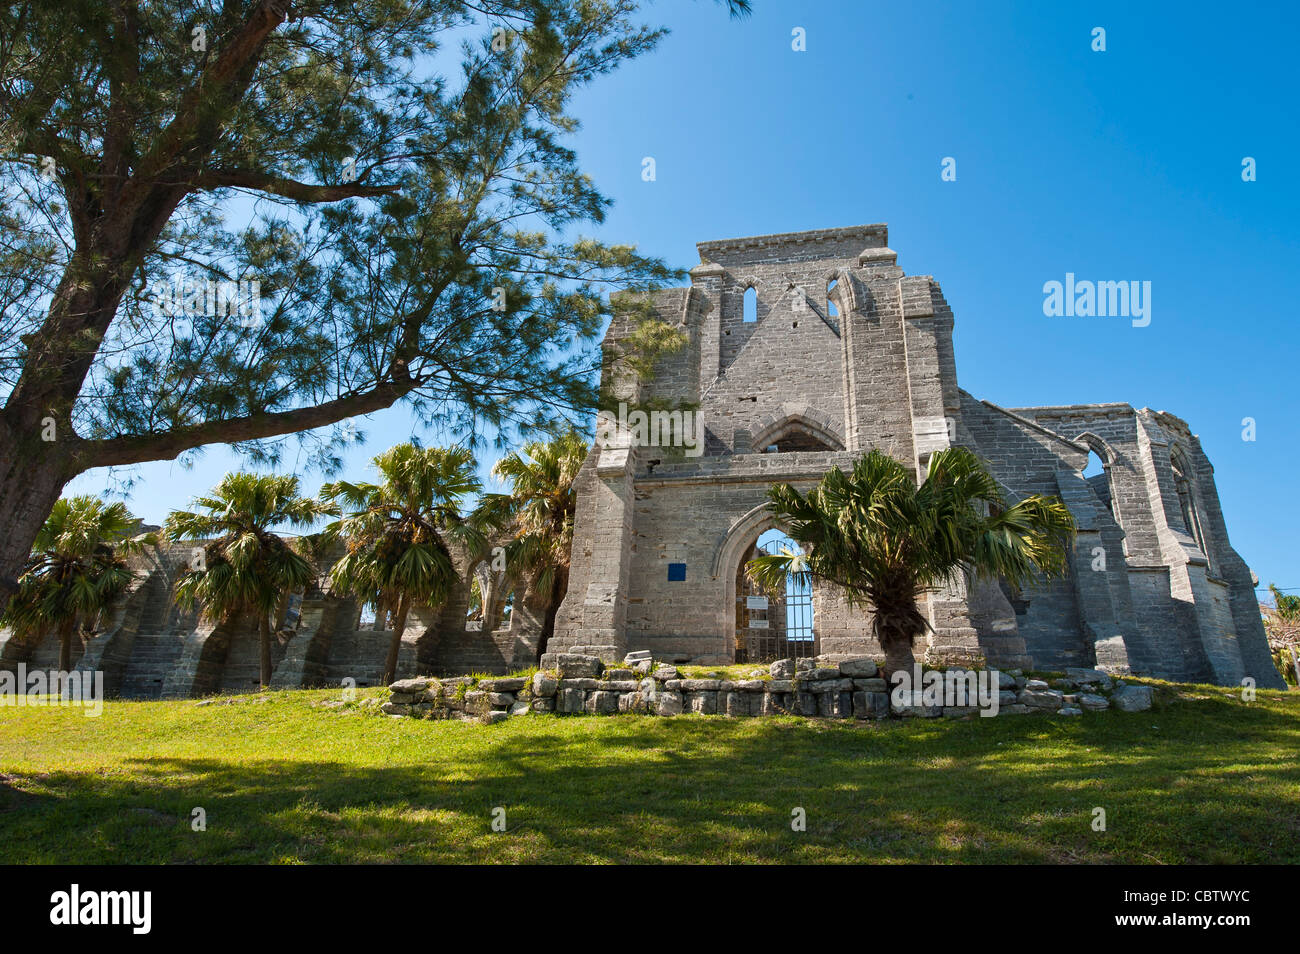 St. George, Bermuda. The unfinished Church in St. George, Bermuda. Stock Photo